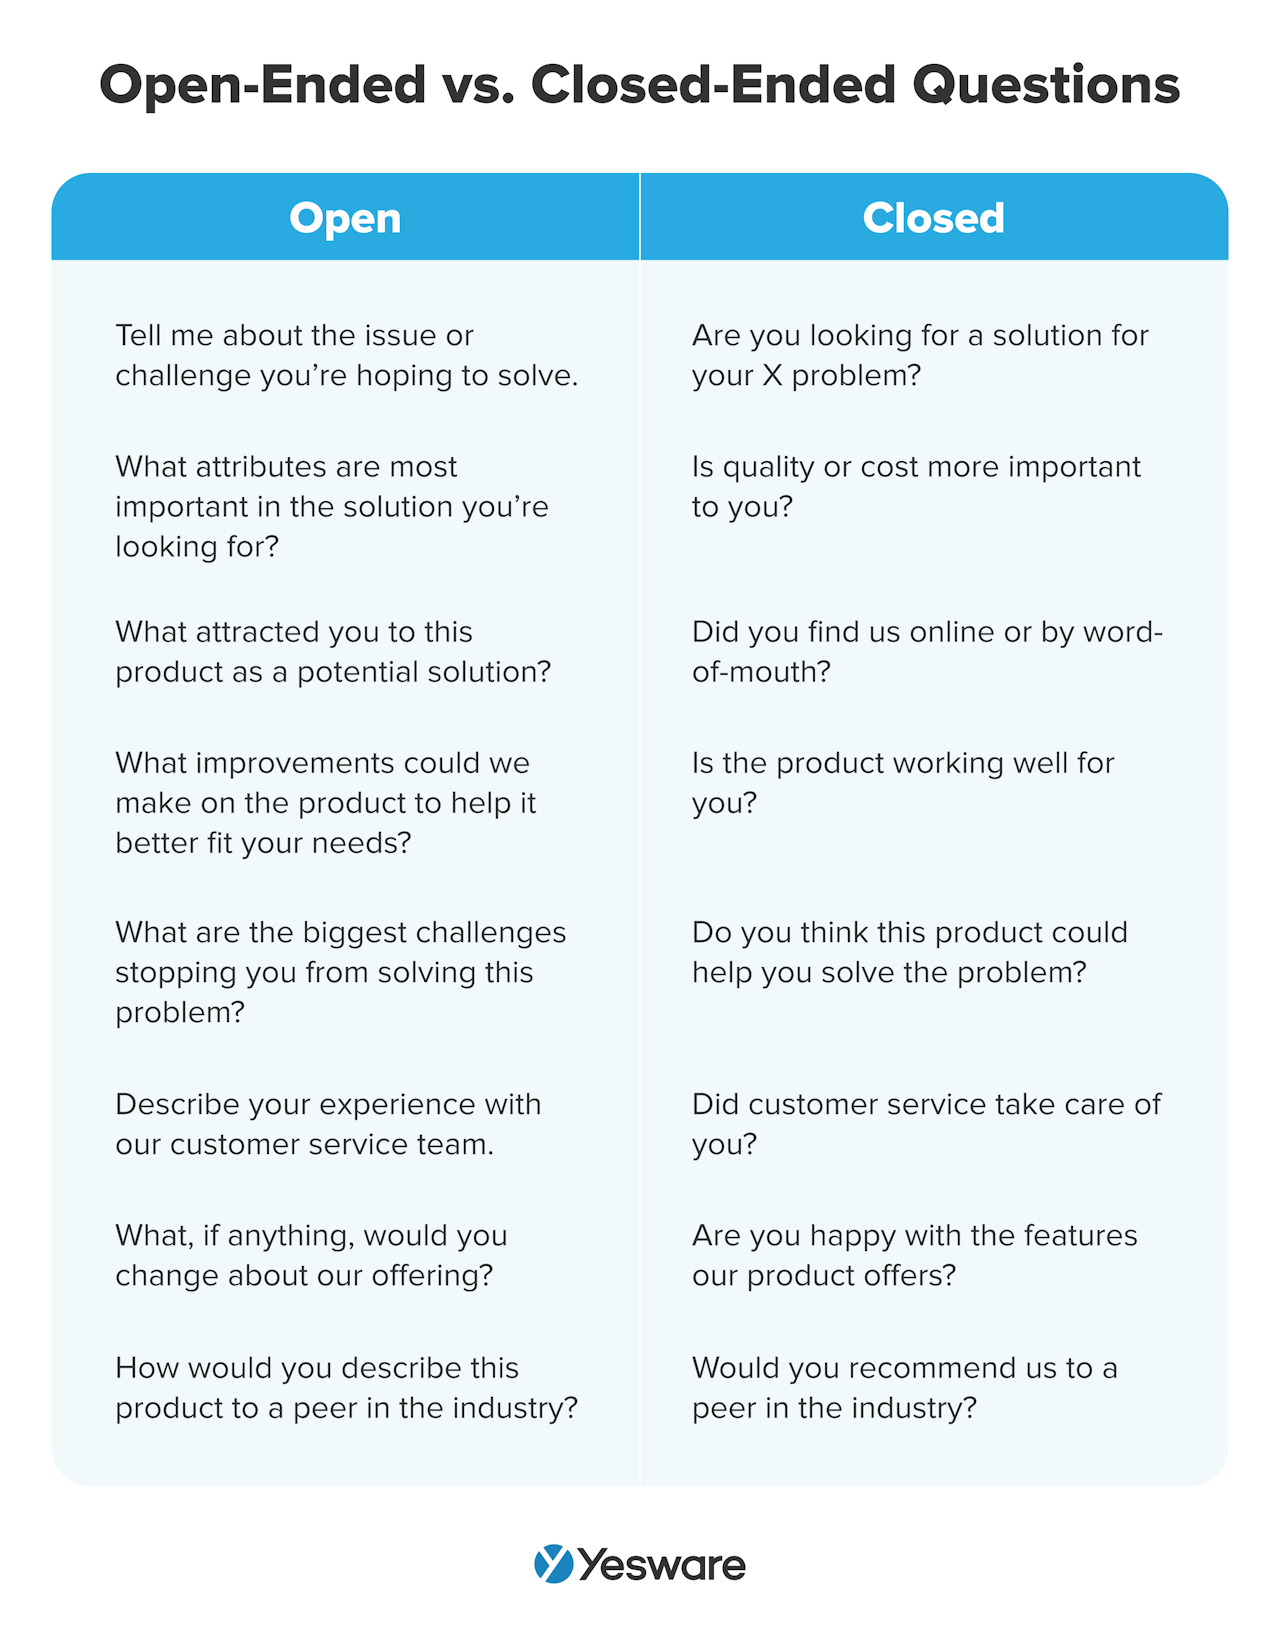 Sales tactics: ask open-ended questions